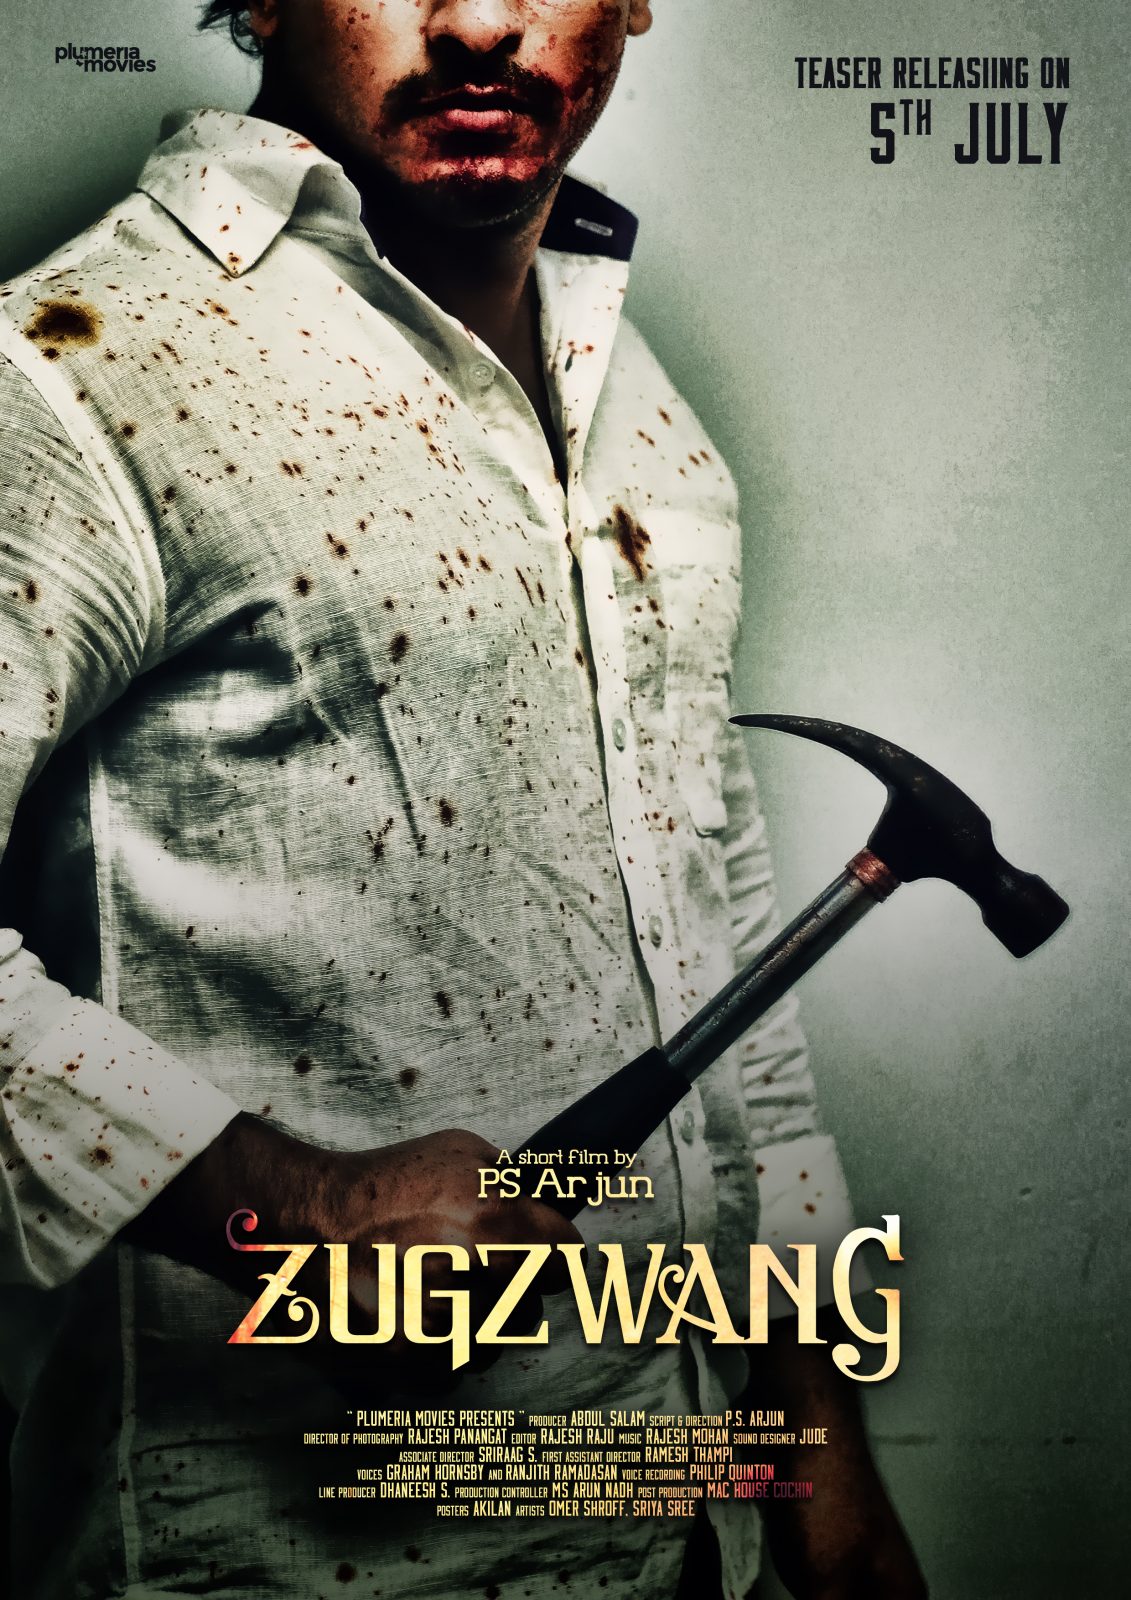 Zugzwang Poster PS Arjun